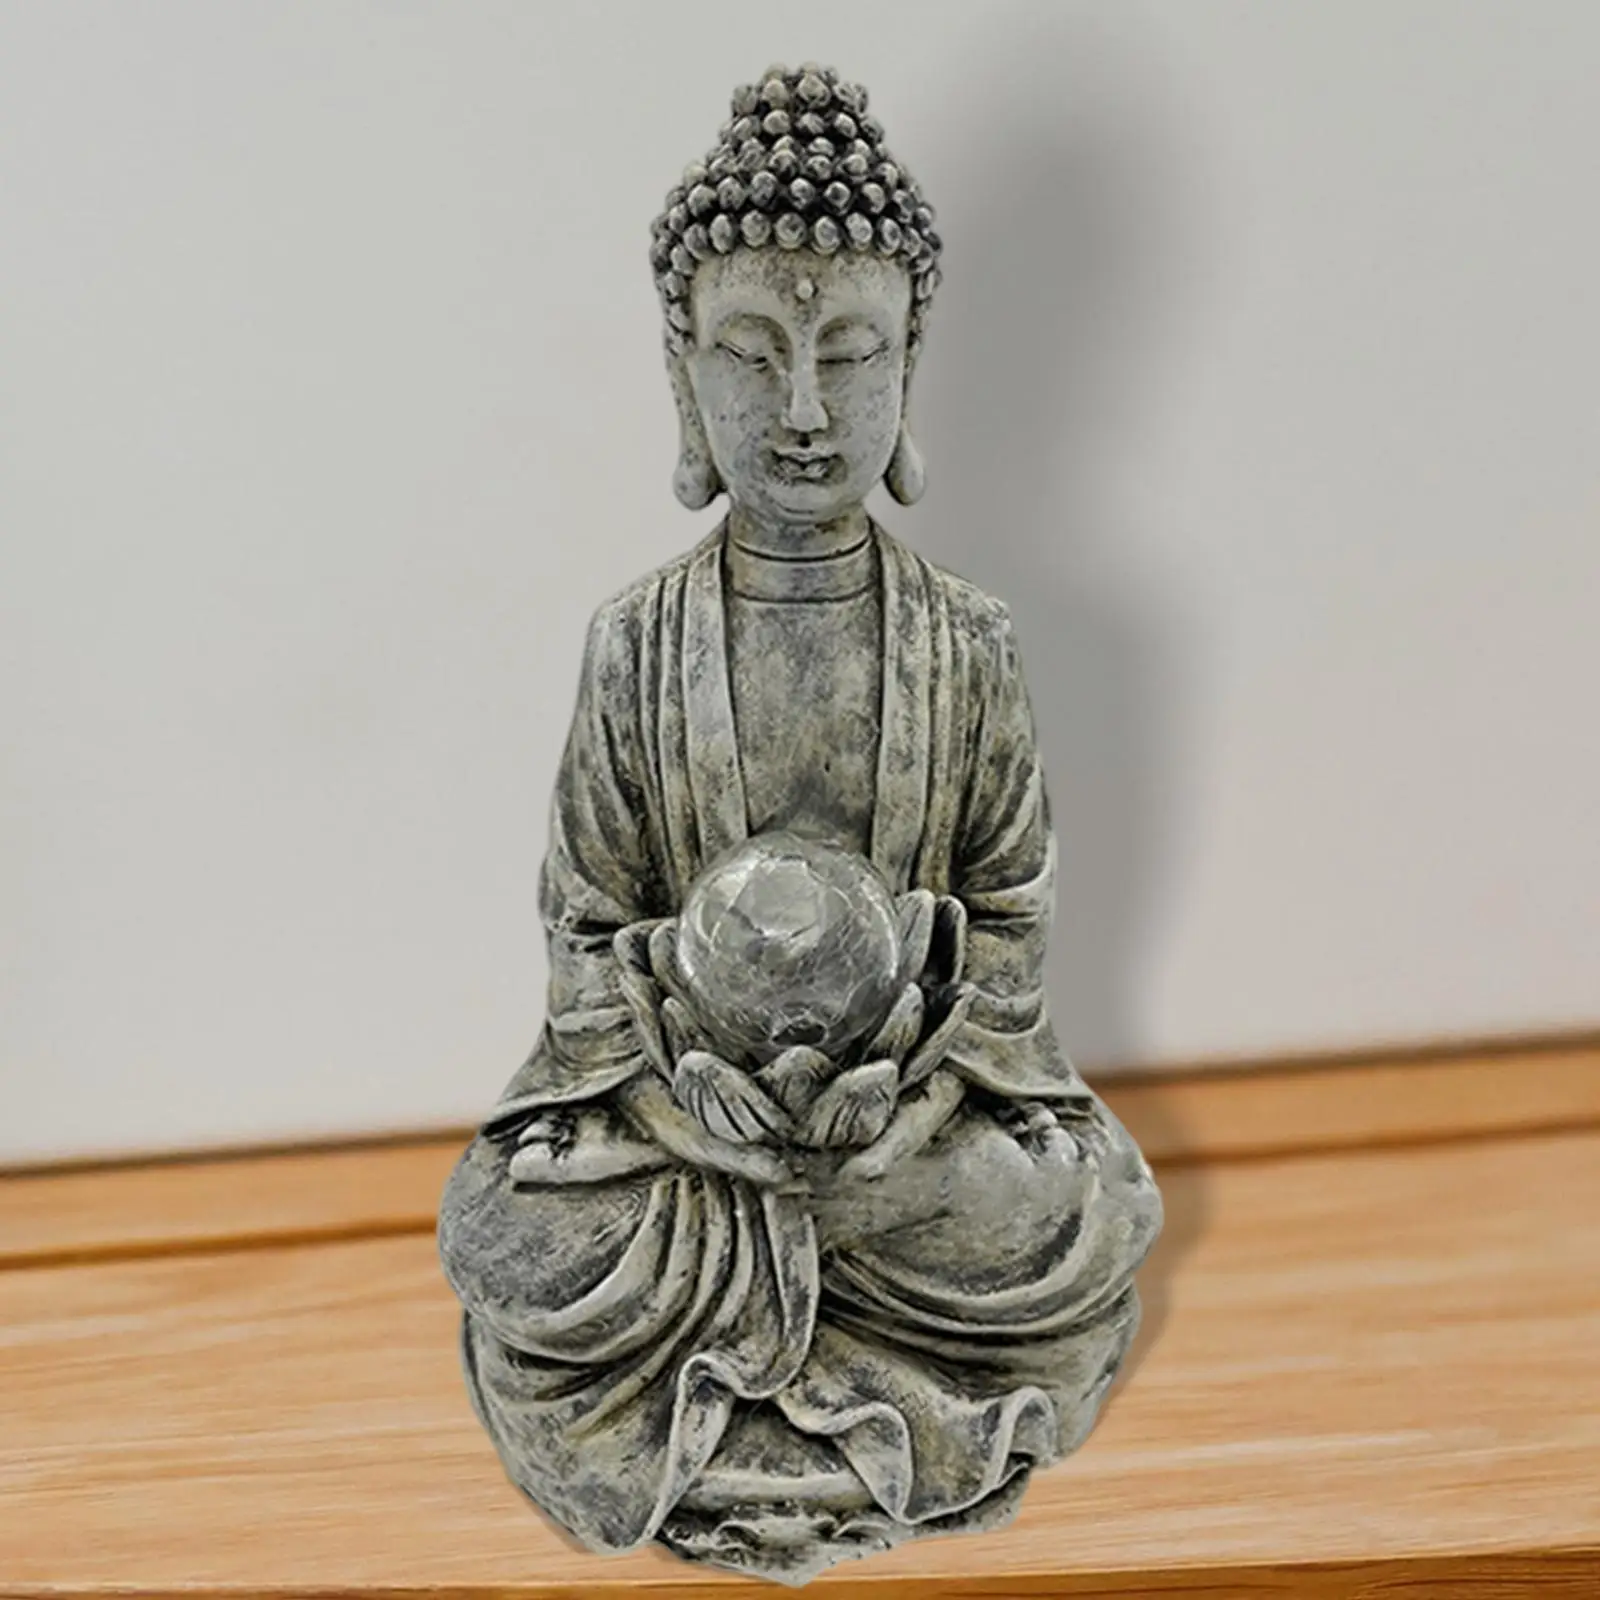 Meditating Buddha Garden Statue Lotus Buddhism Sculpture Resin Figurines LED  for  Porch Housewarming